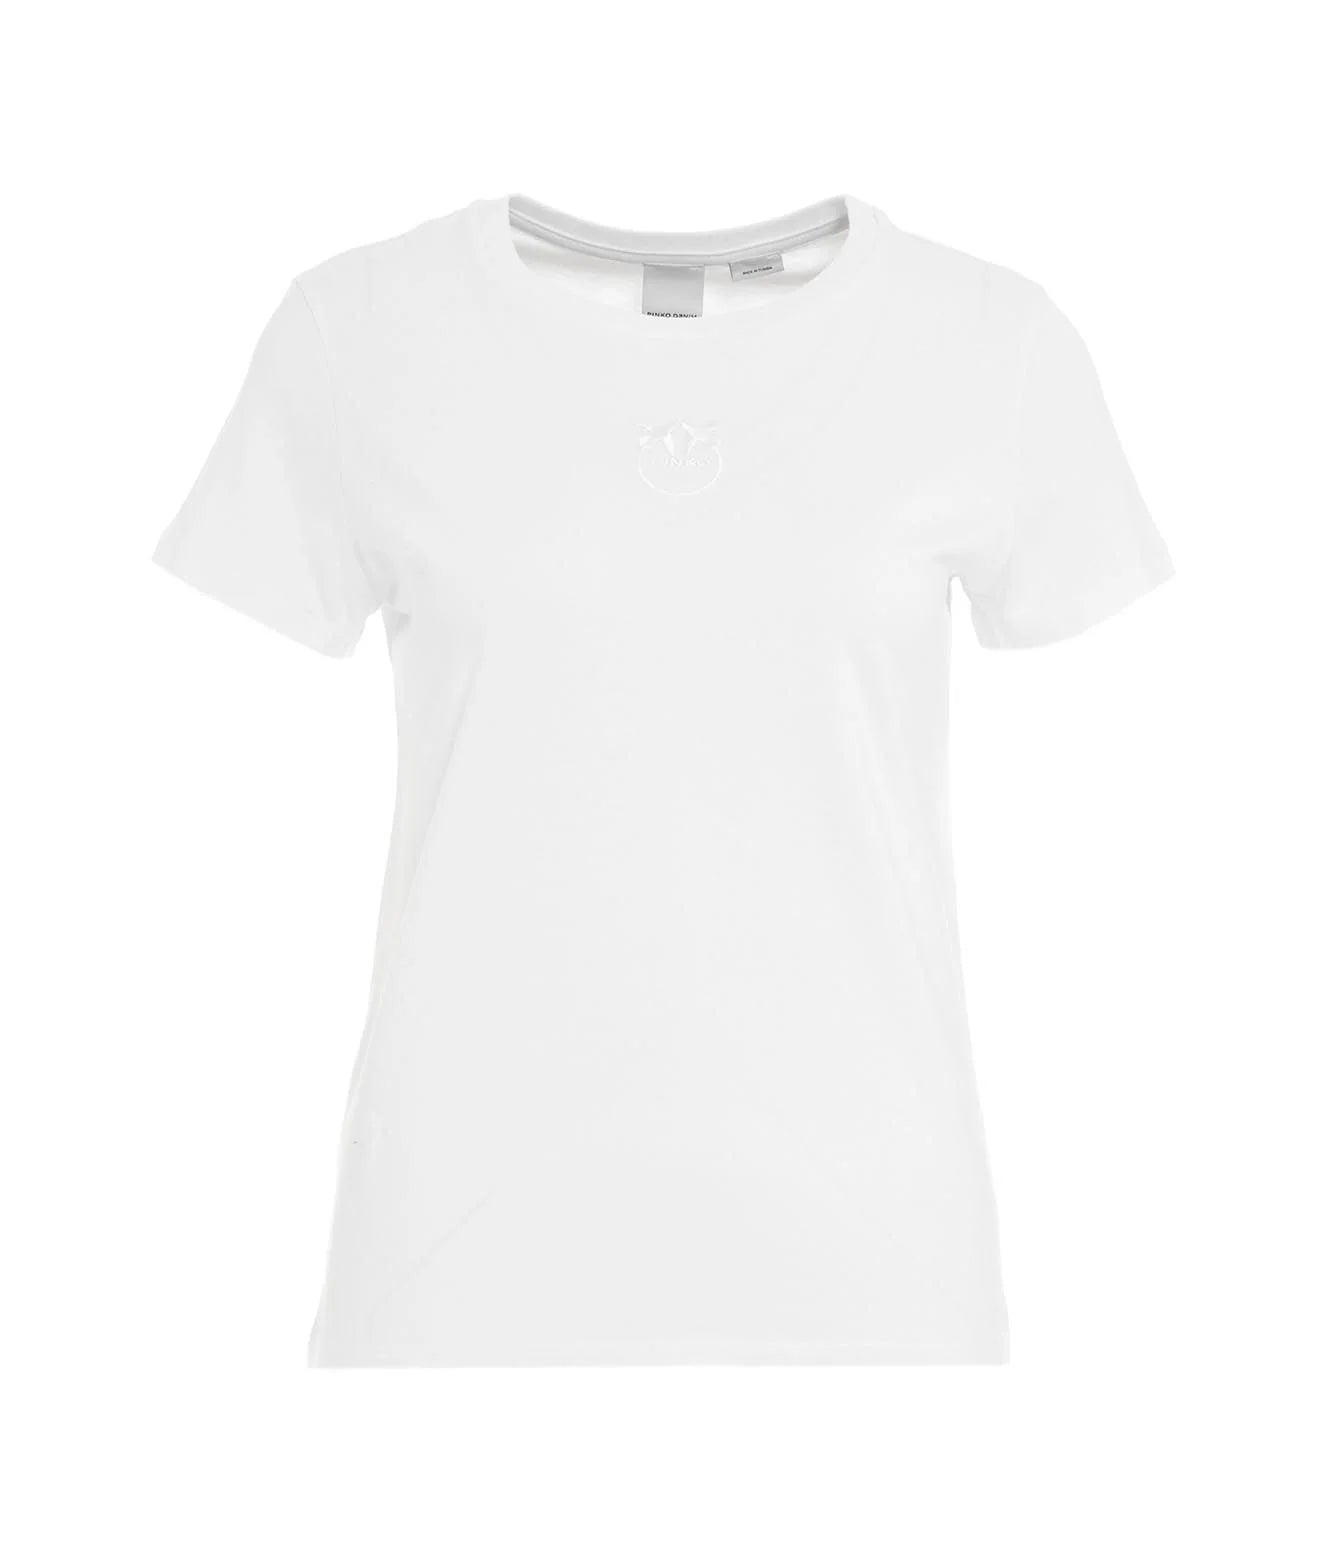 White Bussolotto T-shirt